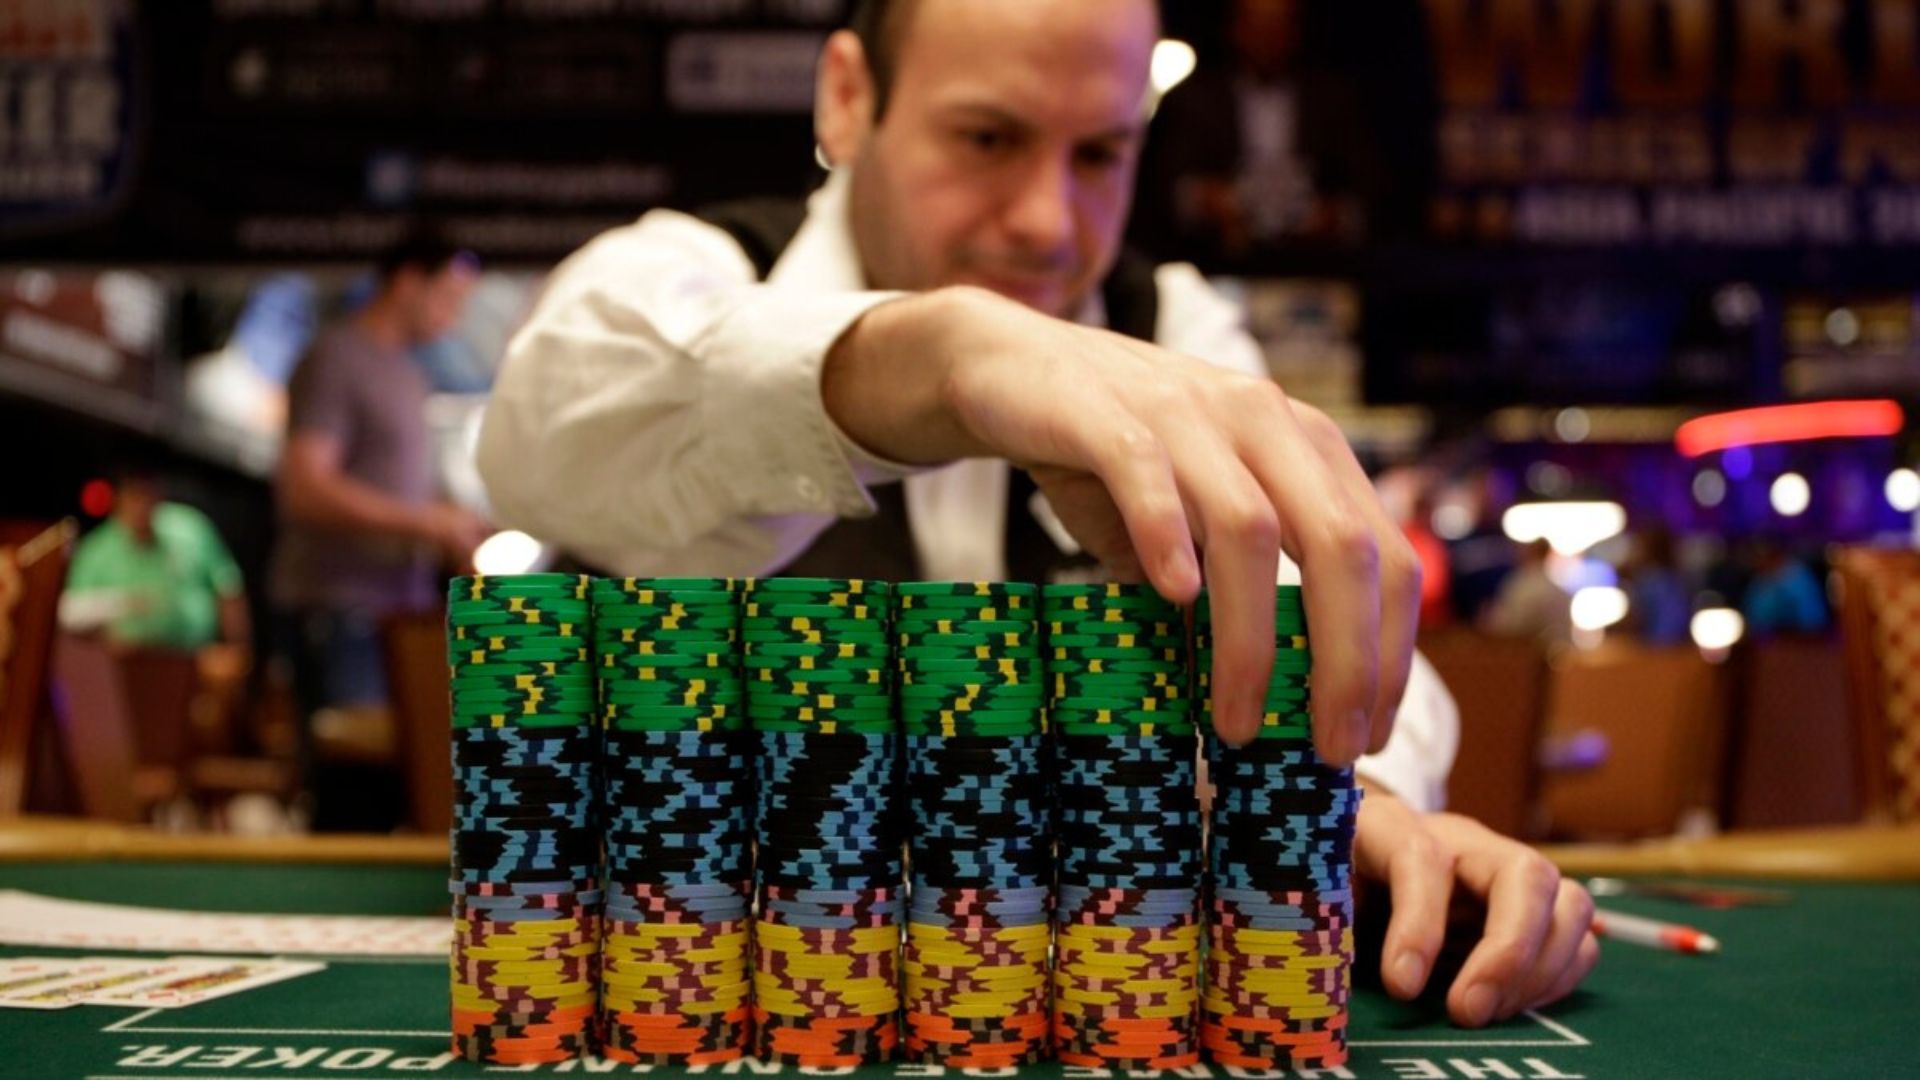 A man in a Casino arranging casino chips